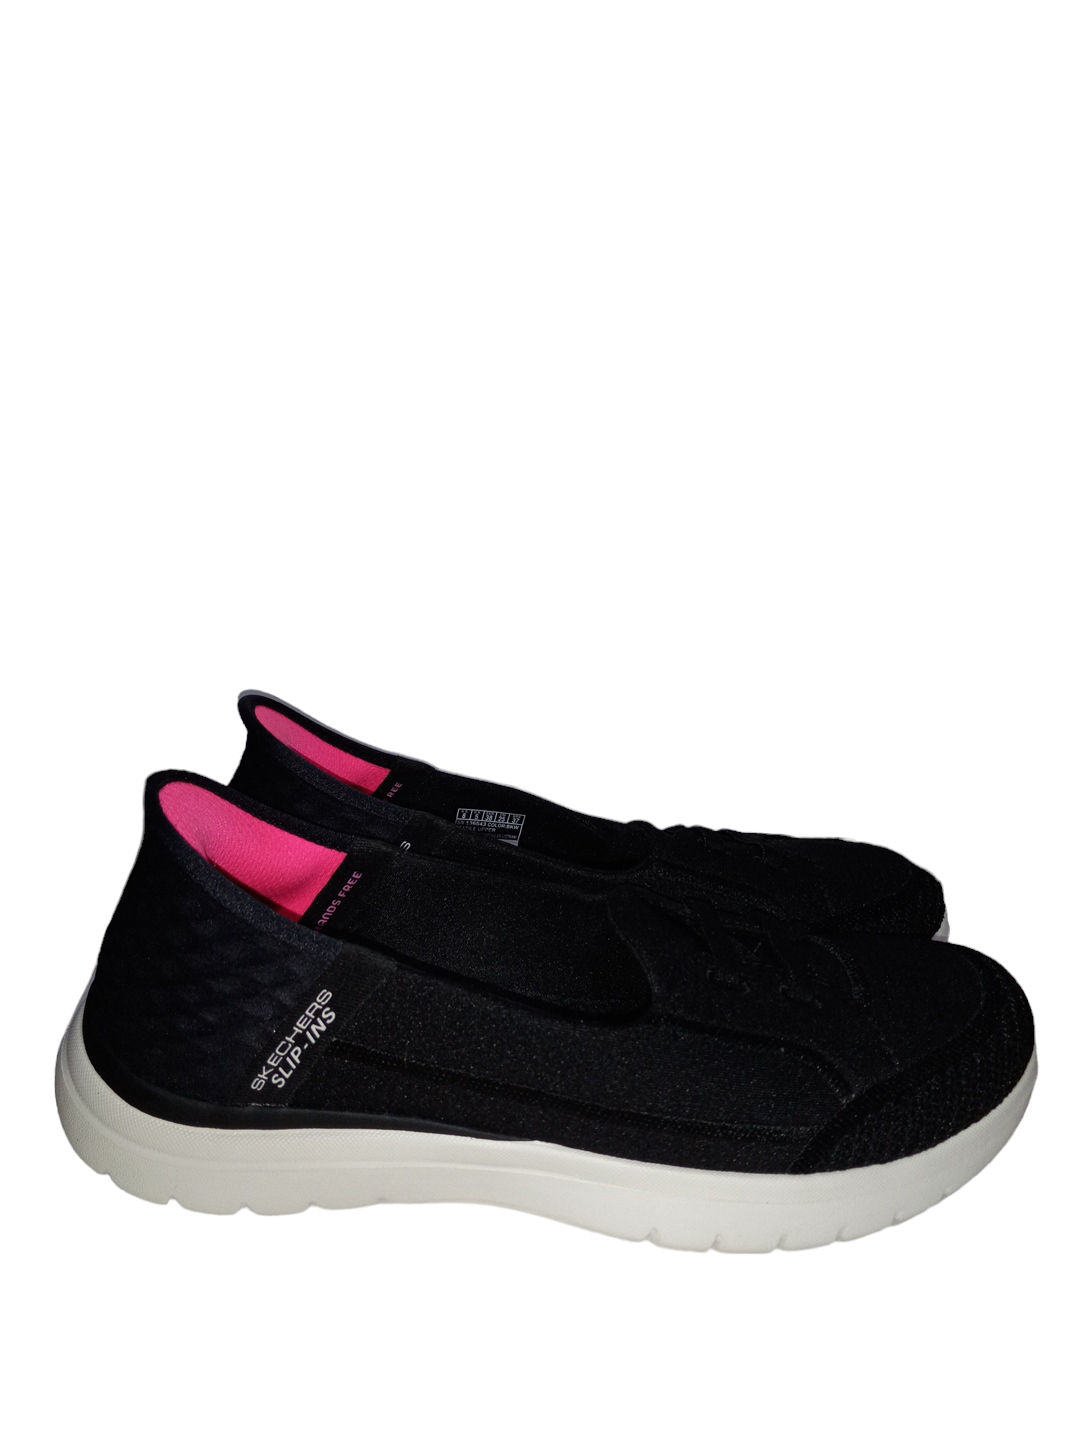 Black Shoes Sneakers Skechers, Size 8